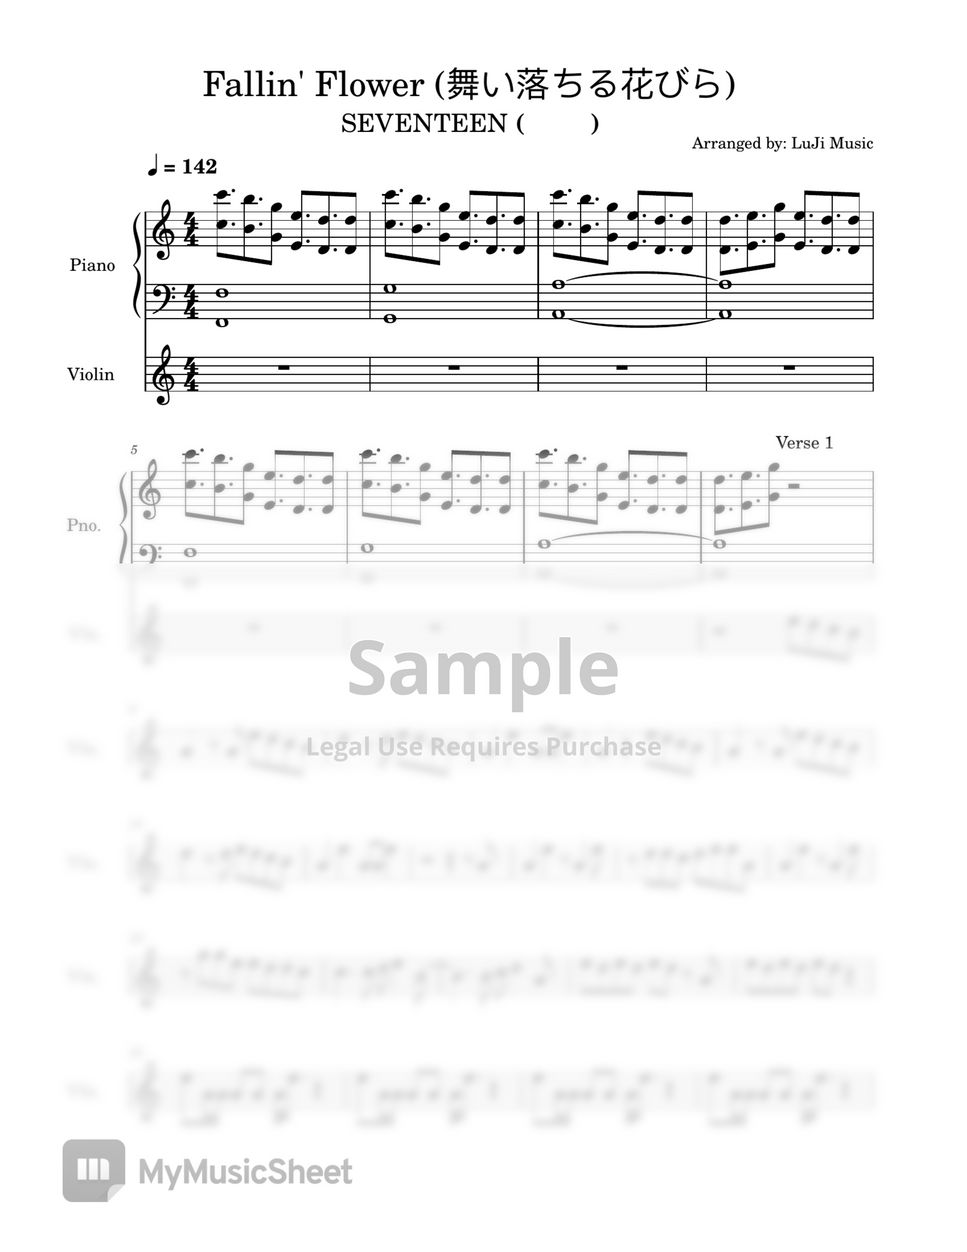 SEVENTEEN (세븐틴) - Fallin' Flower (舞い落ちる花びら) - Violin w/ Piano Intro by LuJi Music